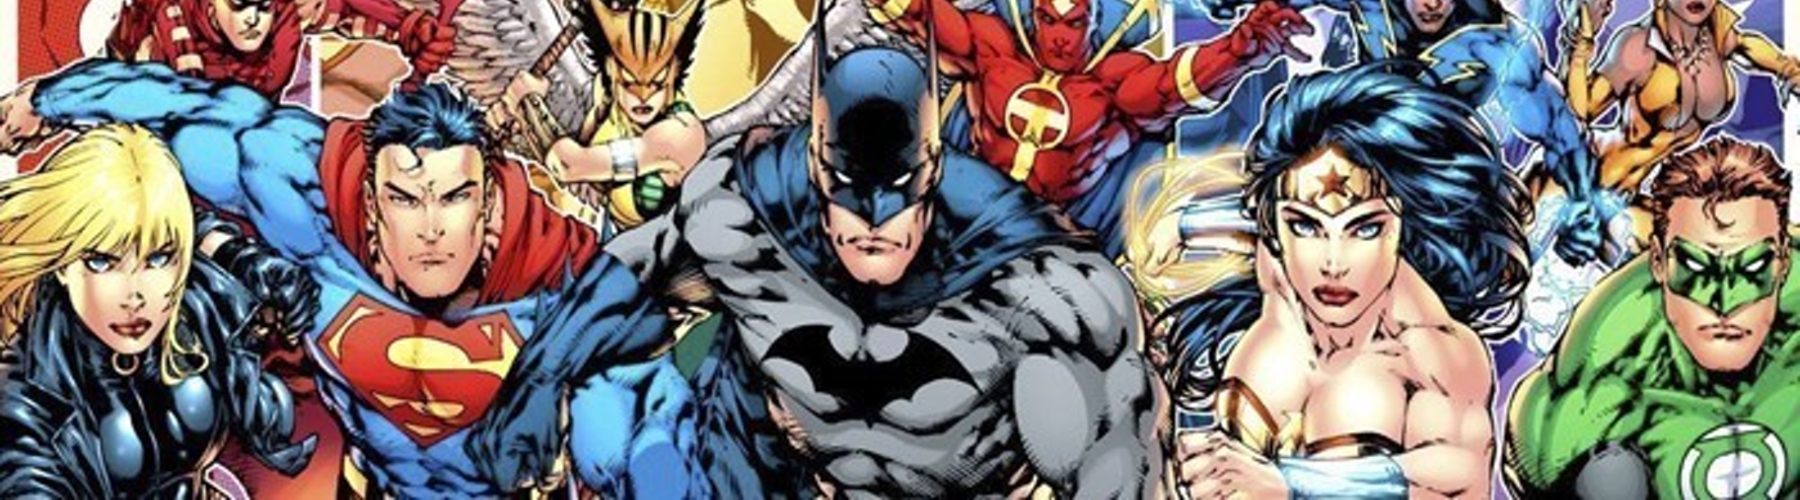 Batman & Related Comics